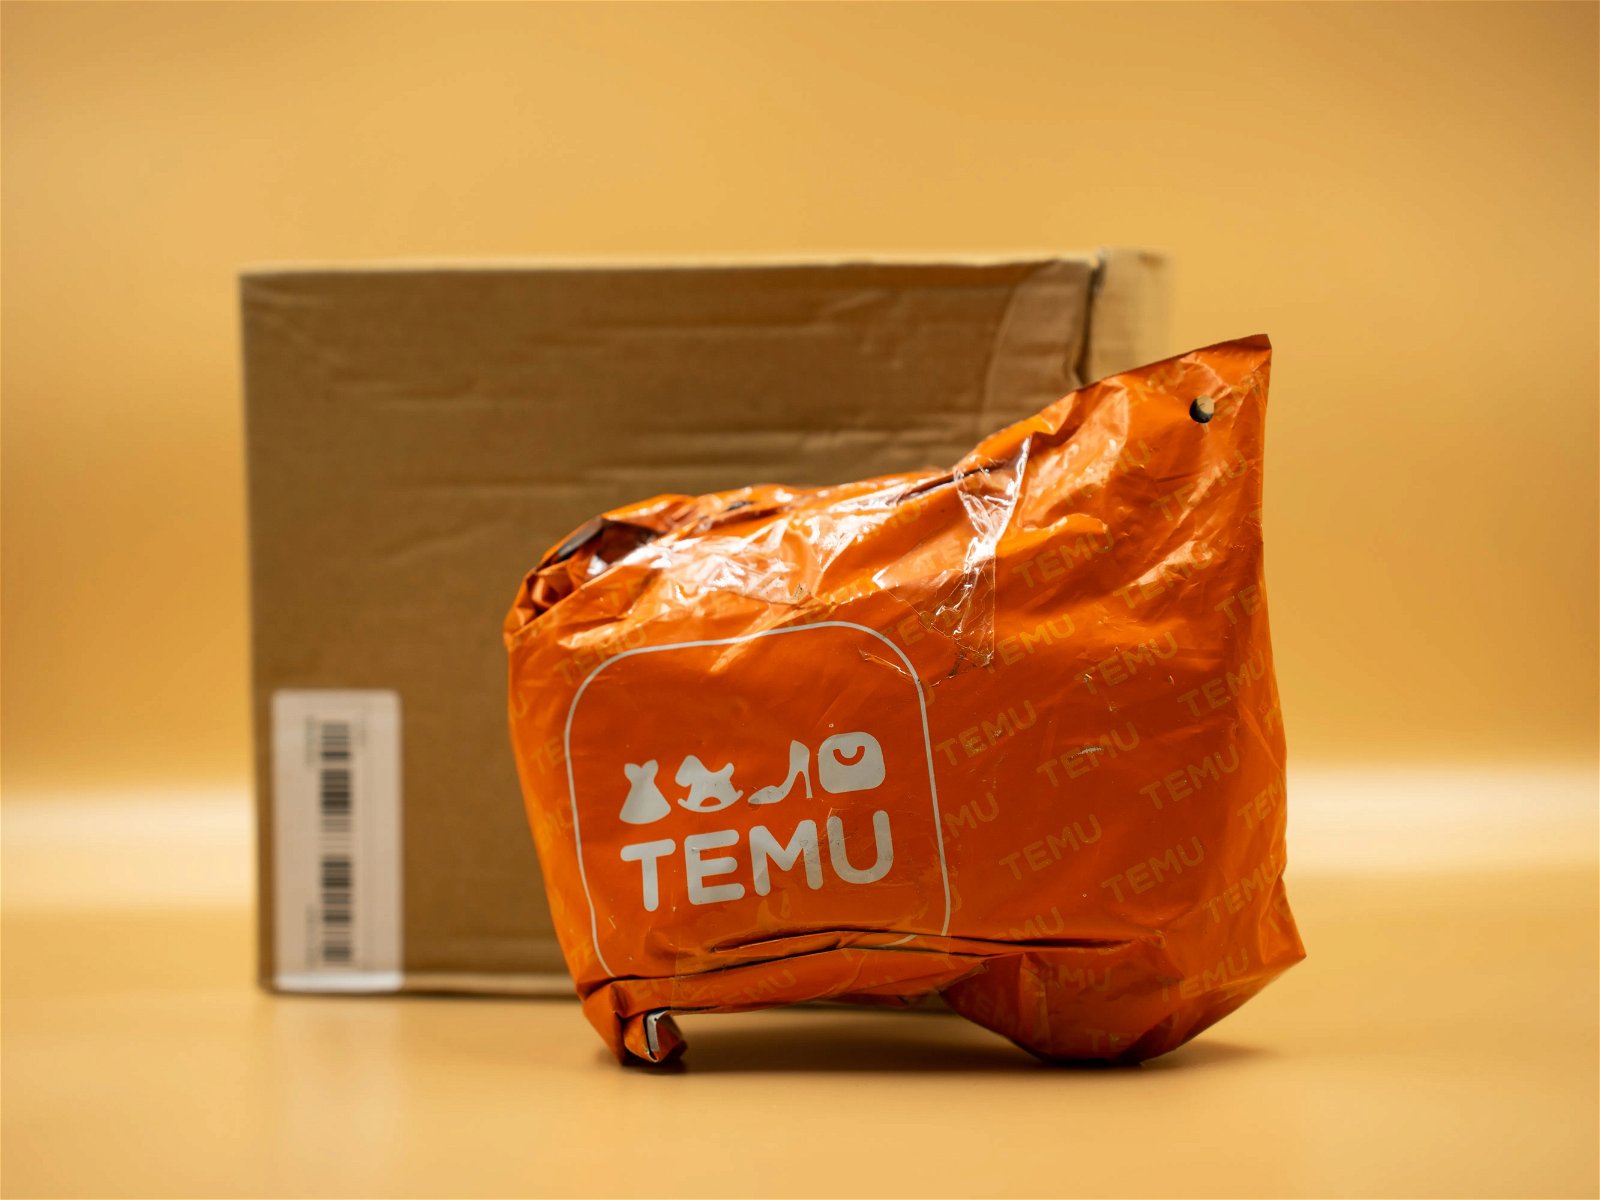 Paquete con un pedido de Temu